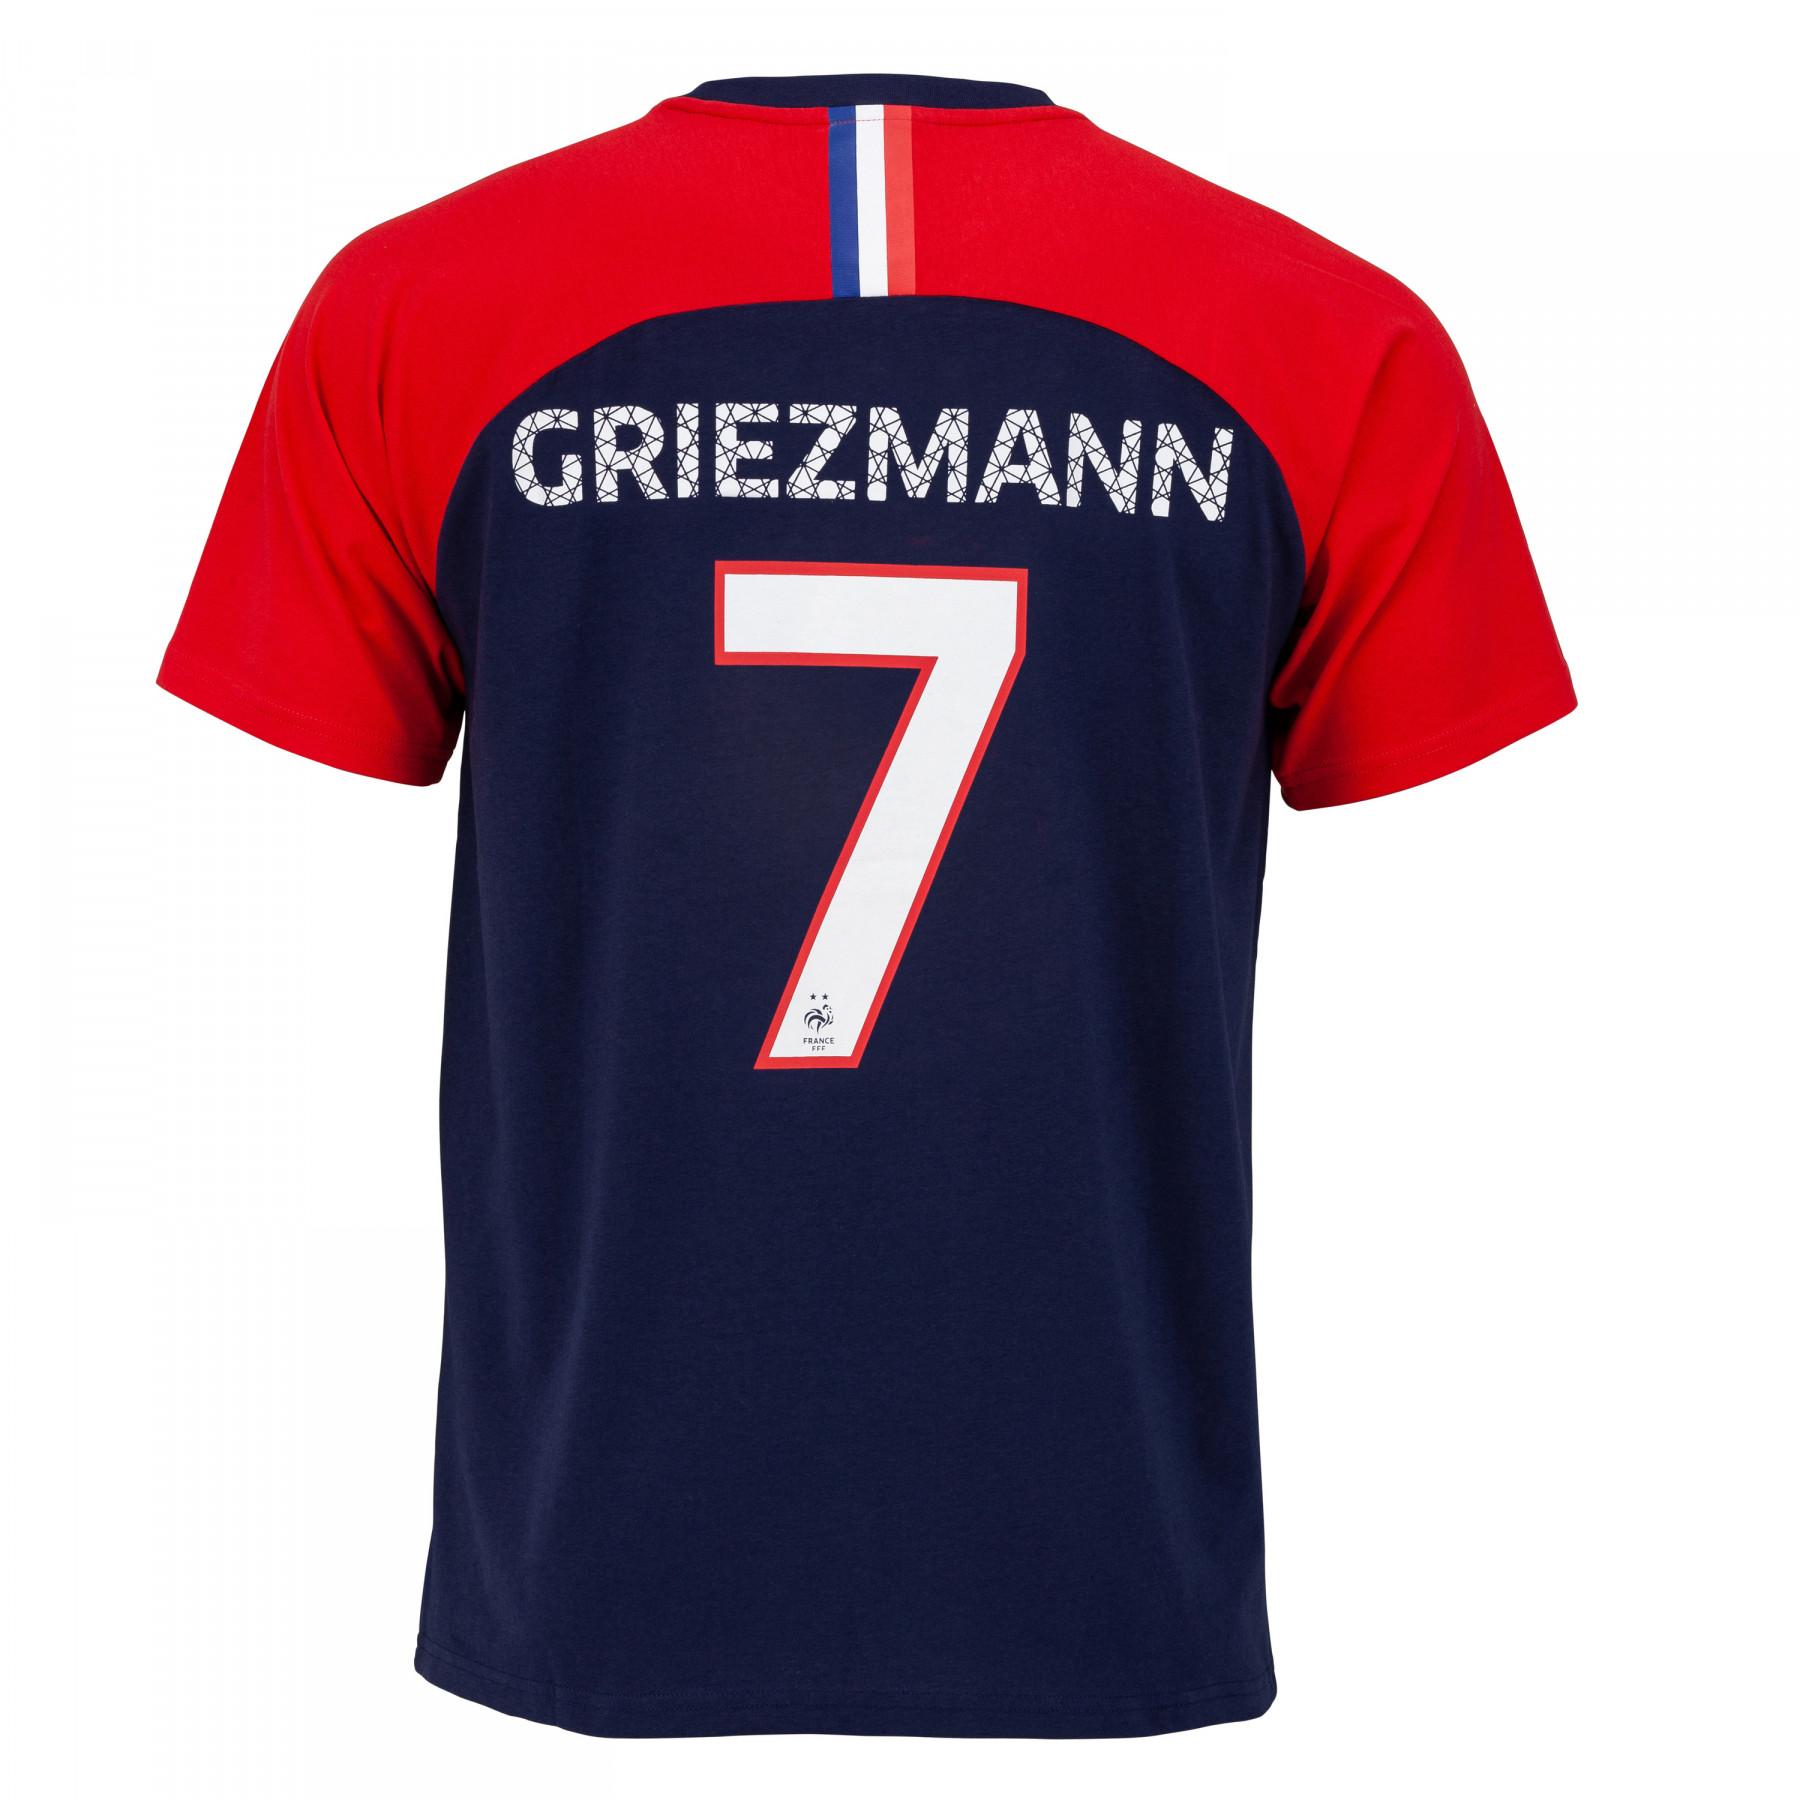 koszulka fff gracz griezmann nr 7